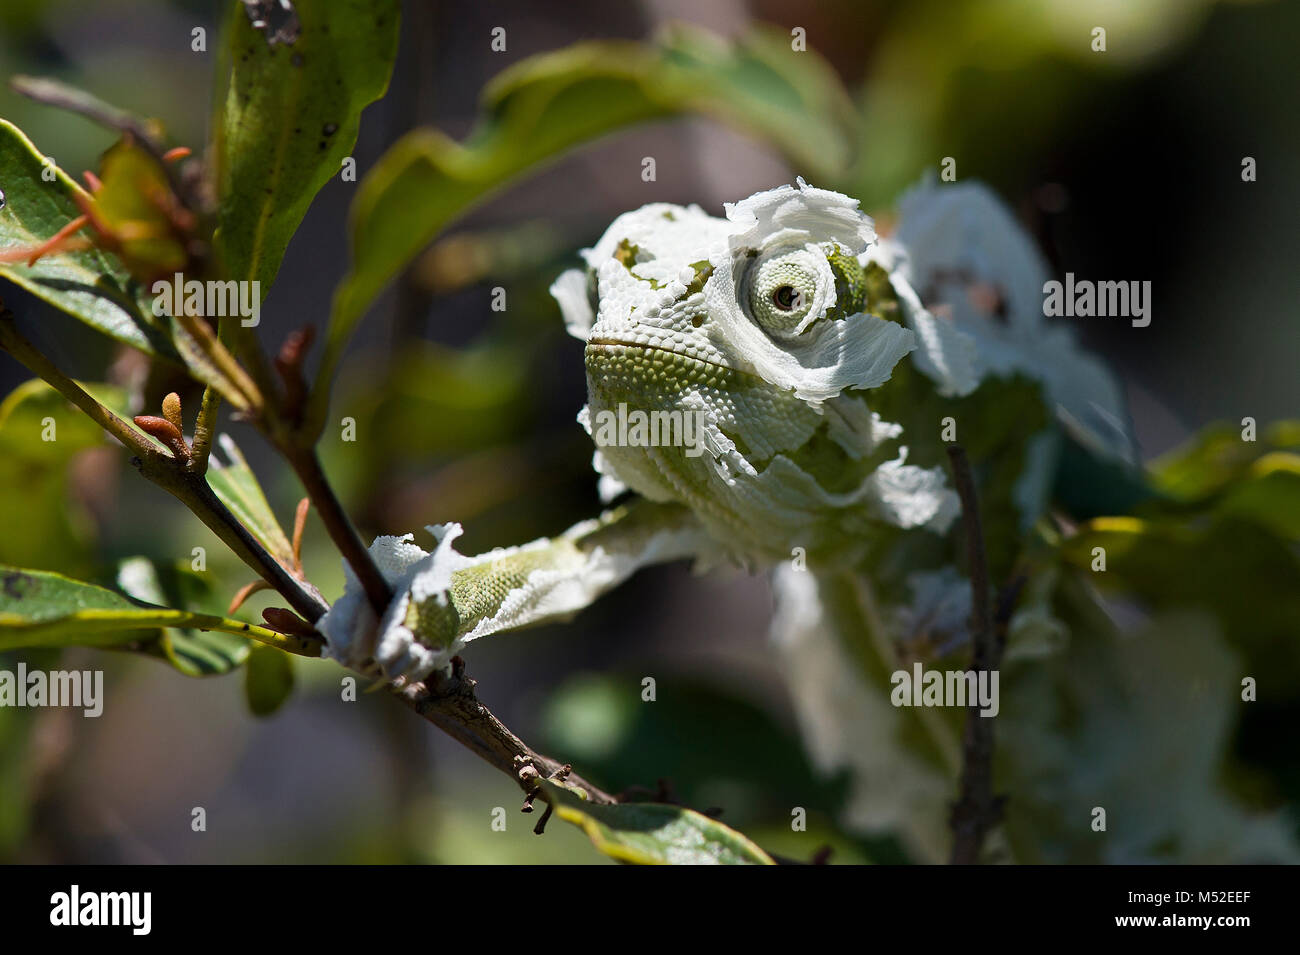 Mariposa-necked chameleon derramando su piel. Foto de stock